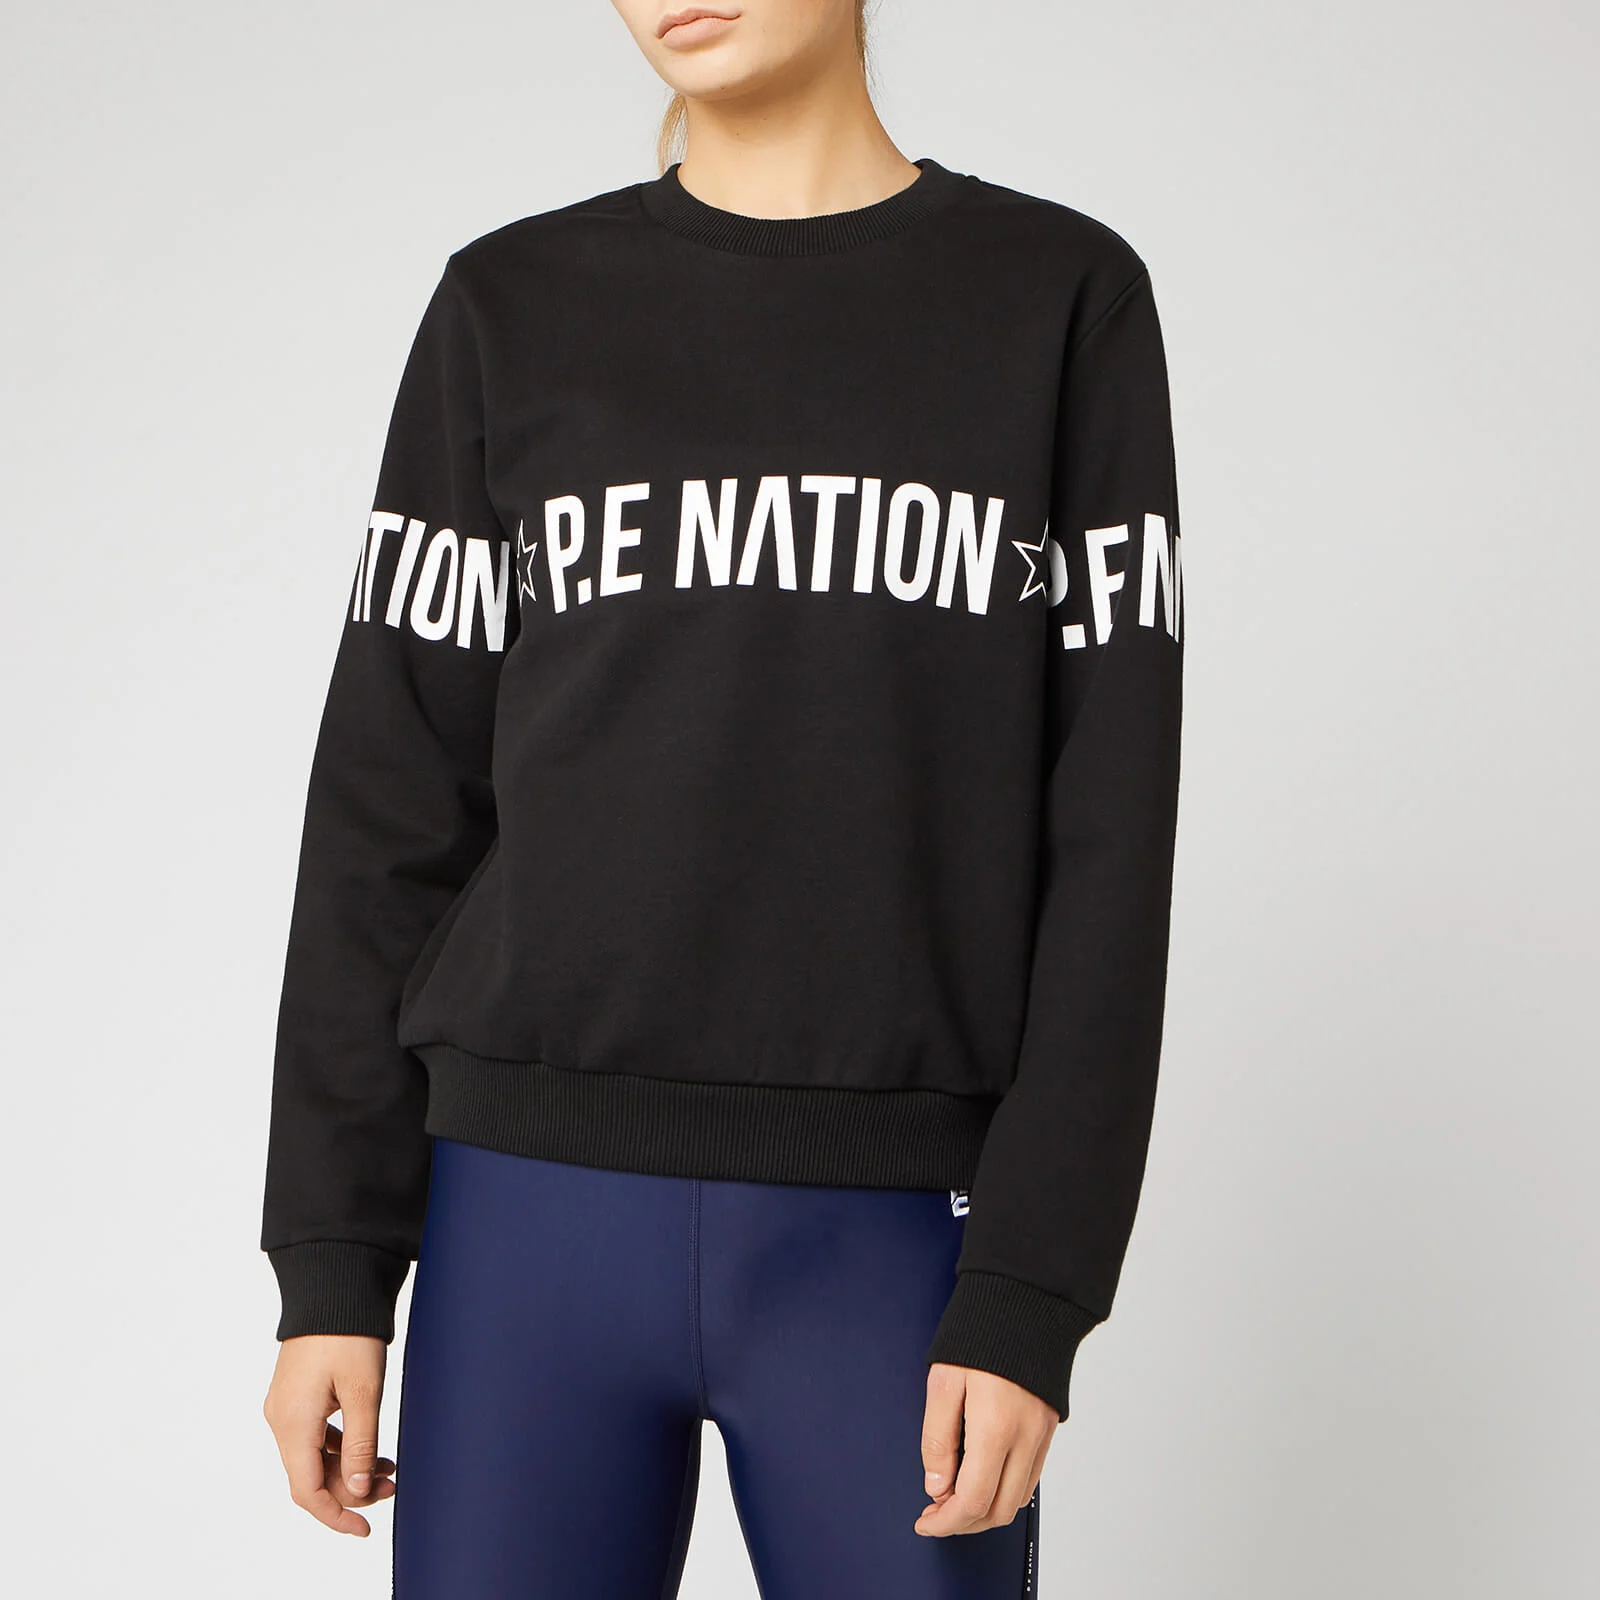 P.E Nation Women's Downclimb Sweatshirt - Black Image 1